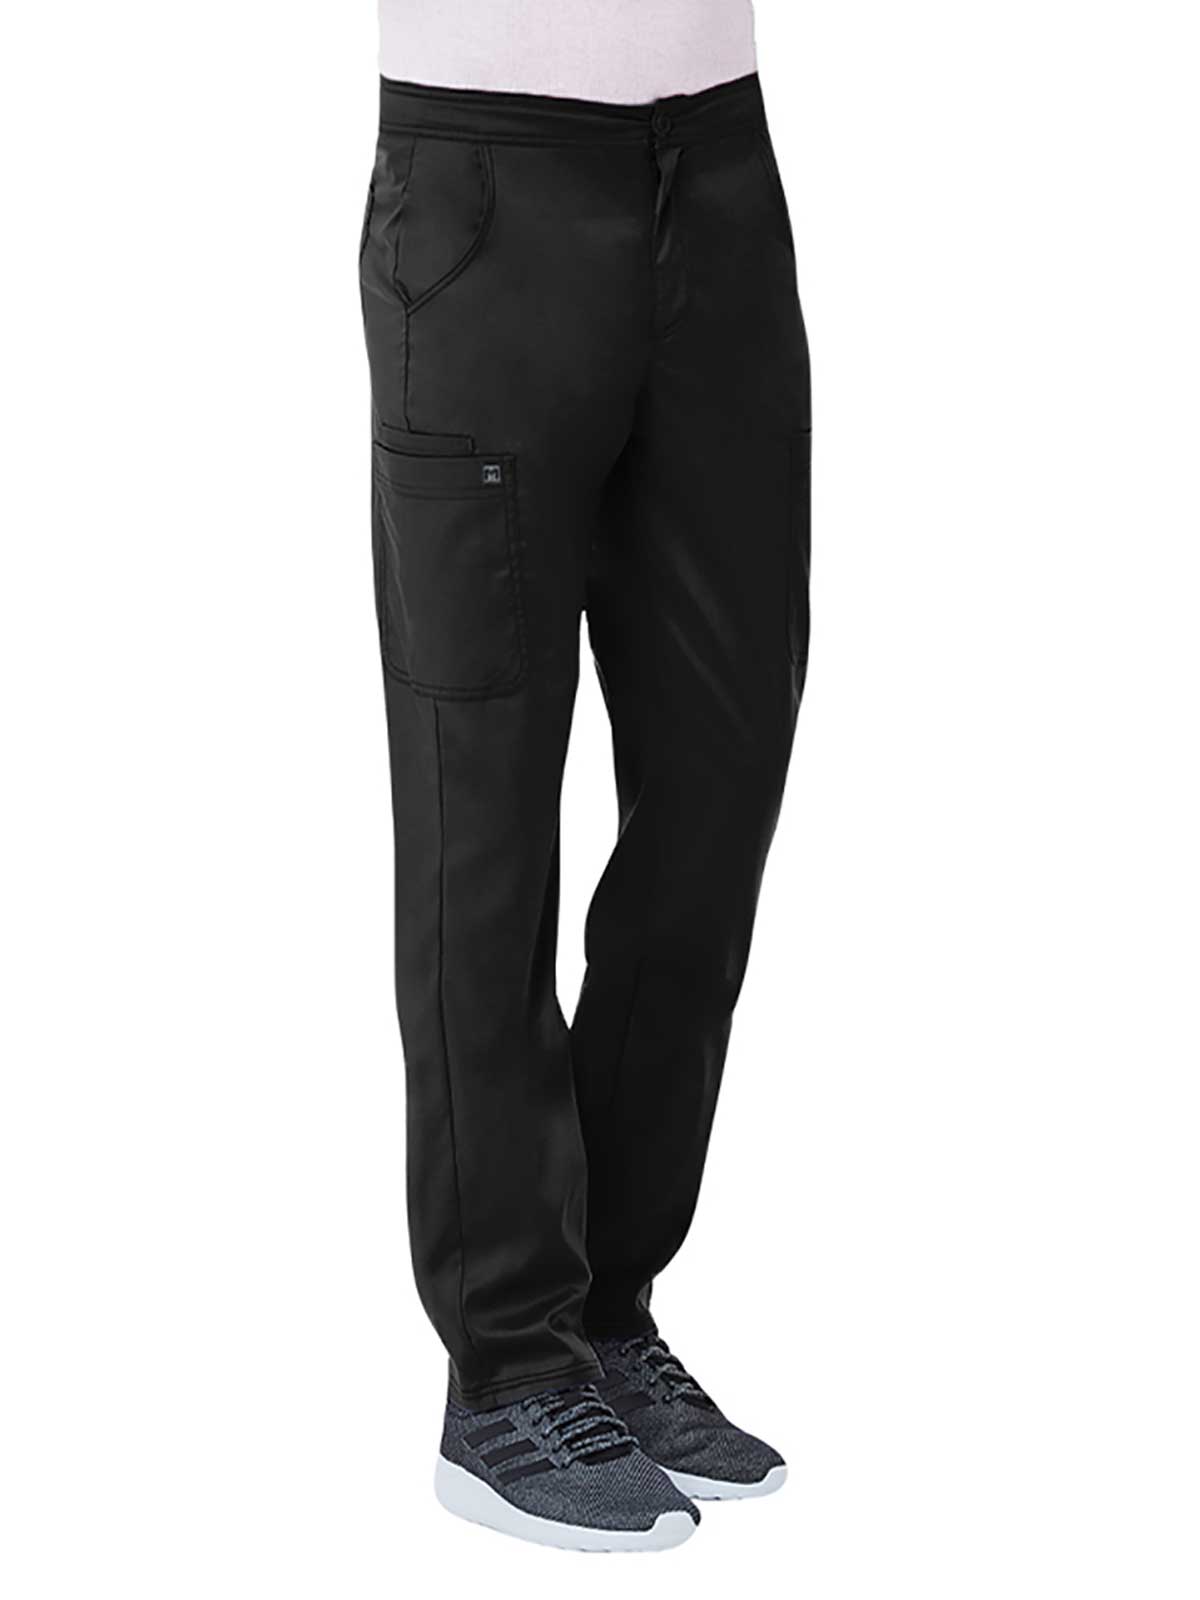 Men's Elastic Waist Cargo Pants - Comfortable and Functional